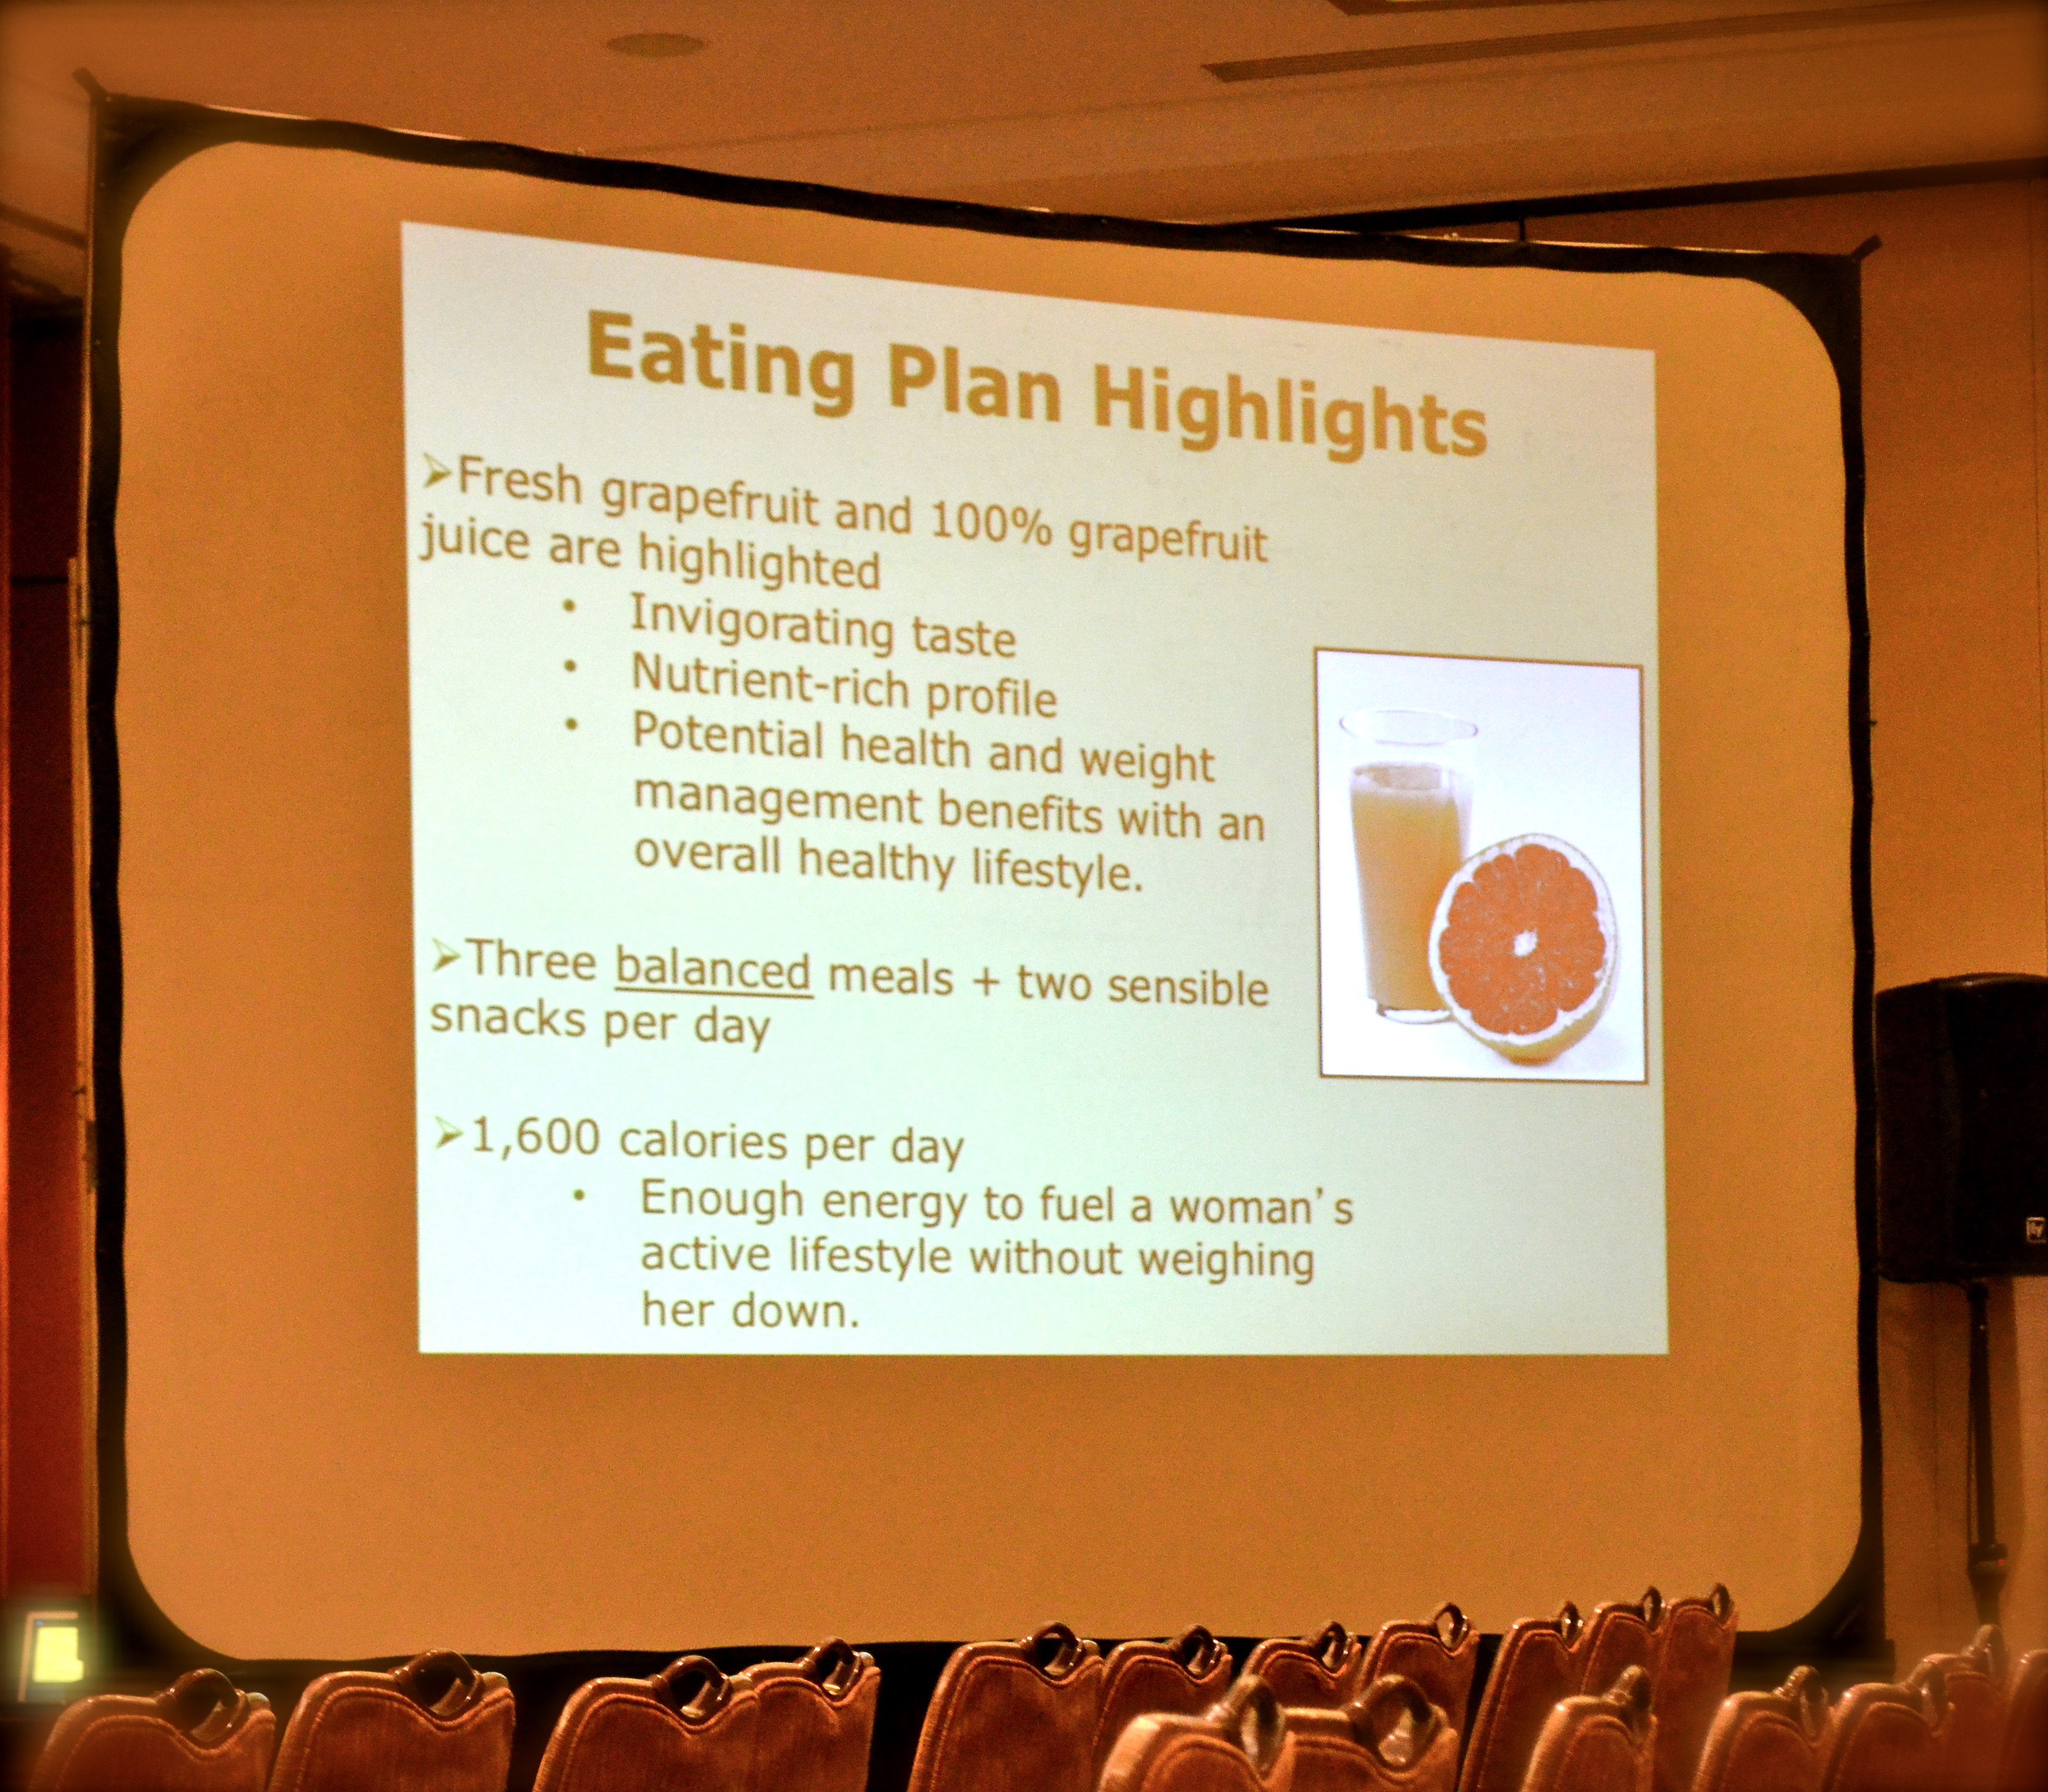 Florida Grapefruit Eating Plan Highlights FitBloggin'12